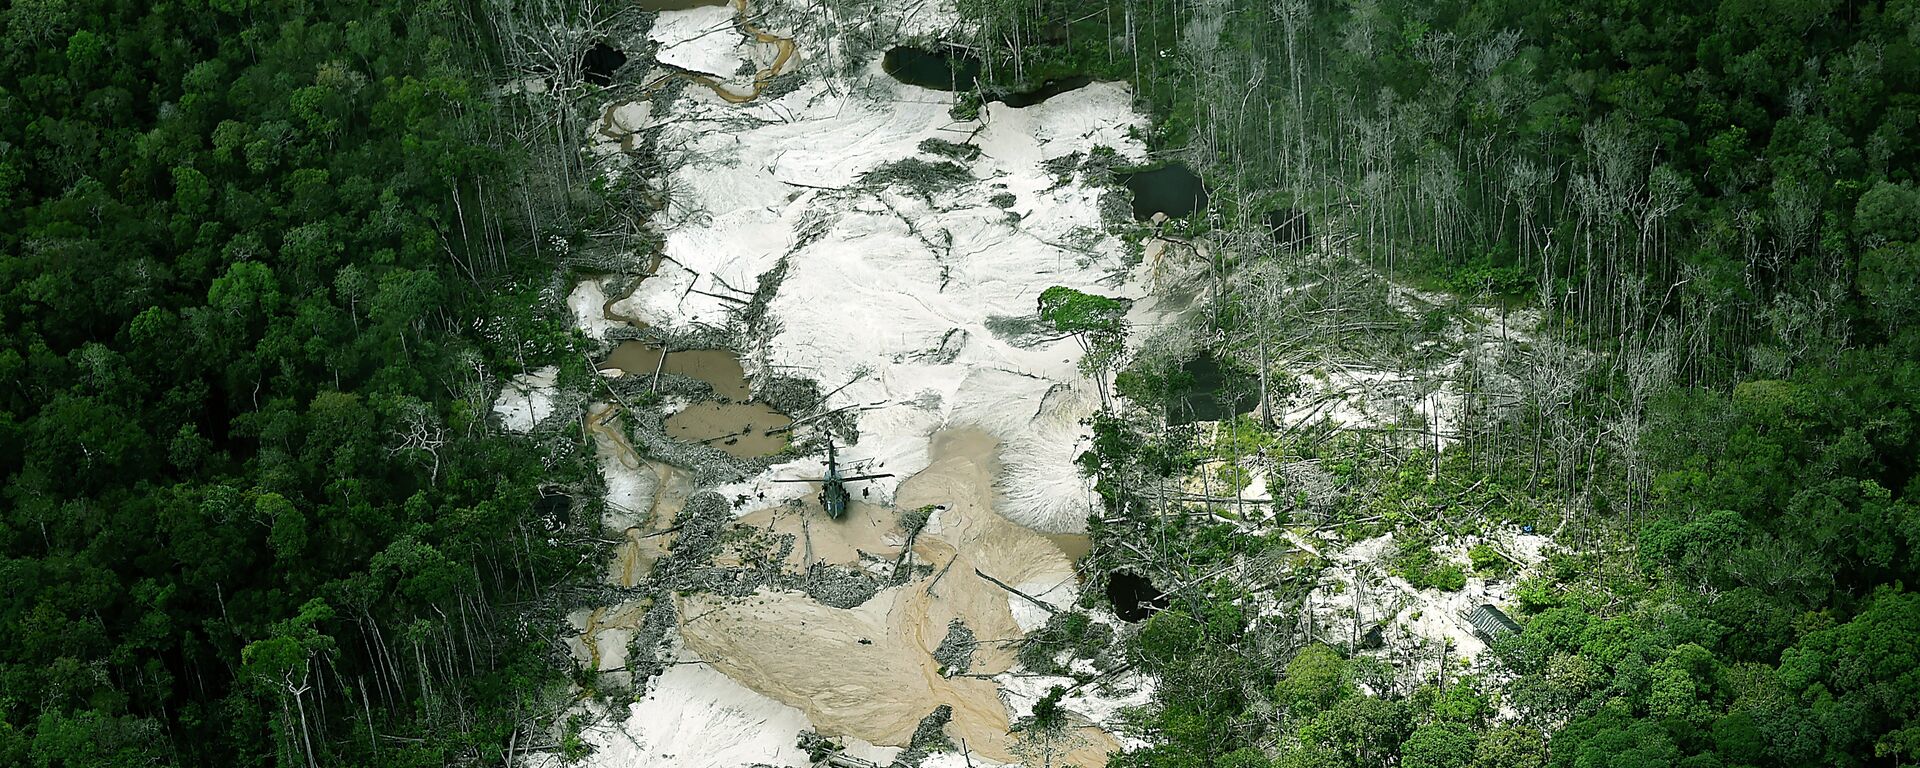 Mina de oro ilegal en la reserva natural Puinawai, Departamento de Guainía, Colombia - Sputnik Mundo, 1920, 24.08.2015